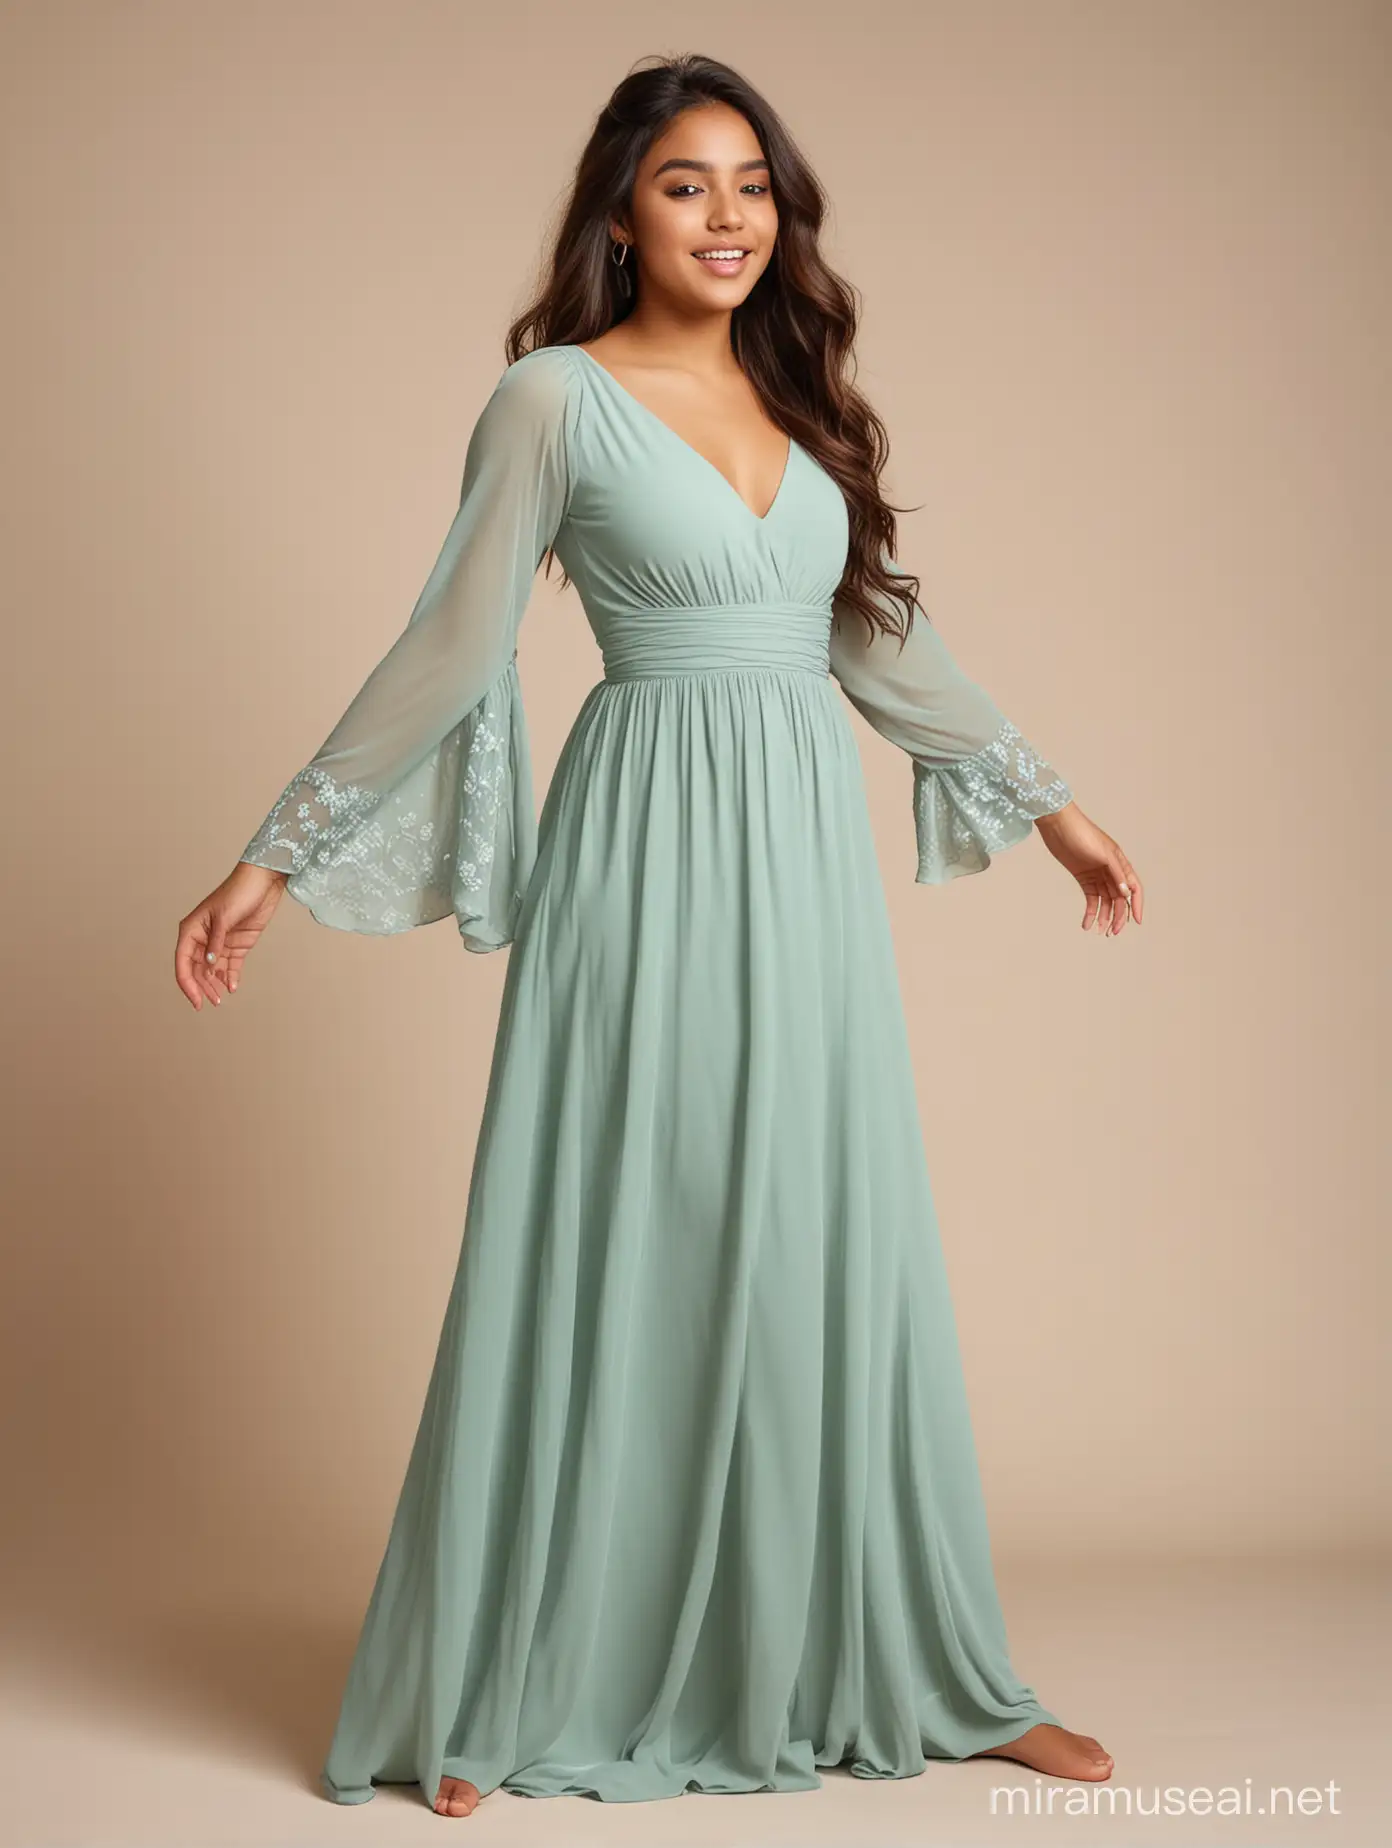 Elegant Latina Teenage Bridesmaid in Flowy Sleeved Dress